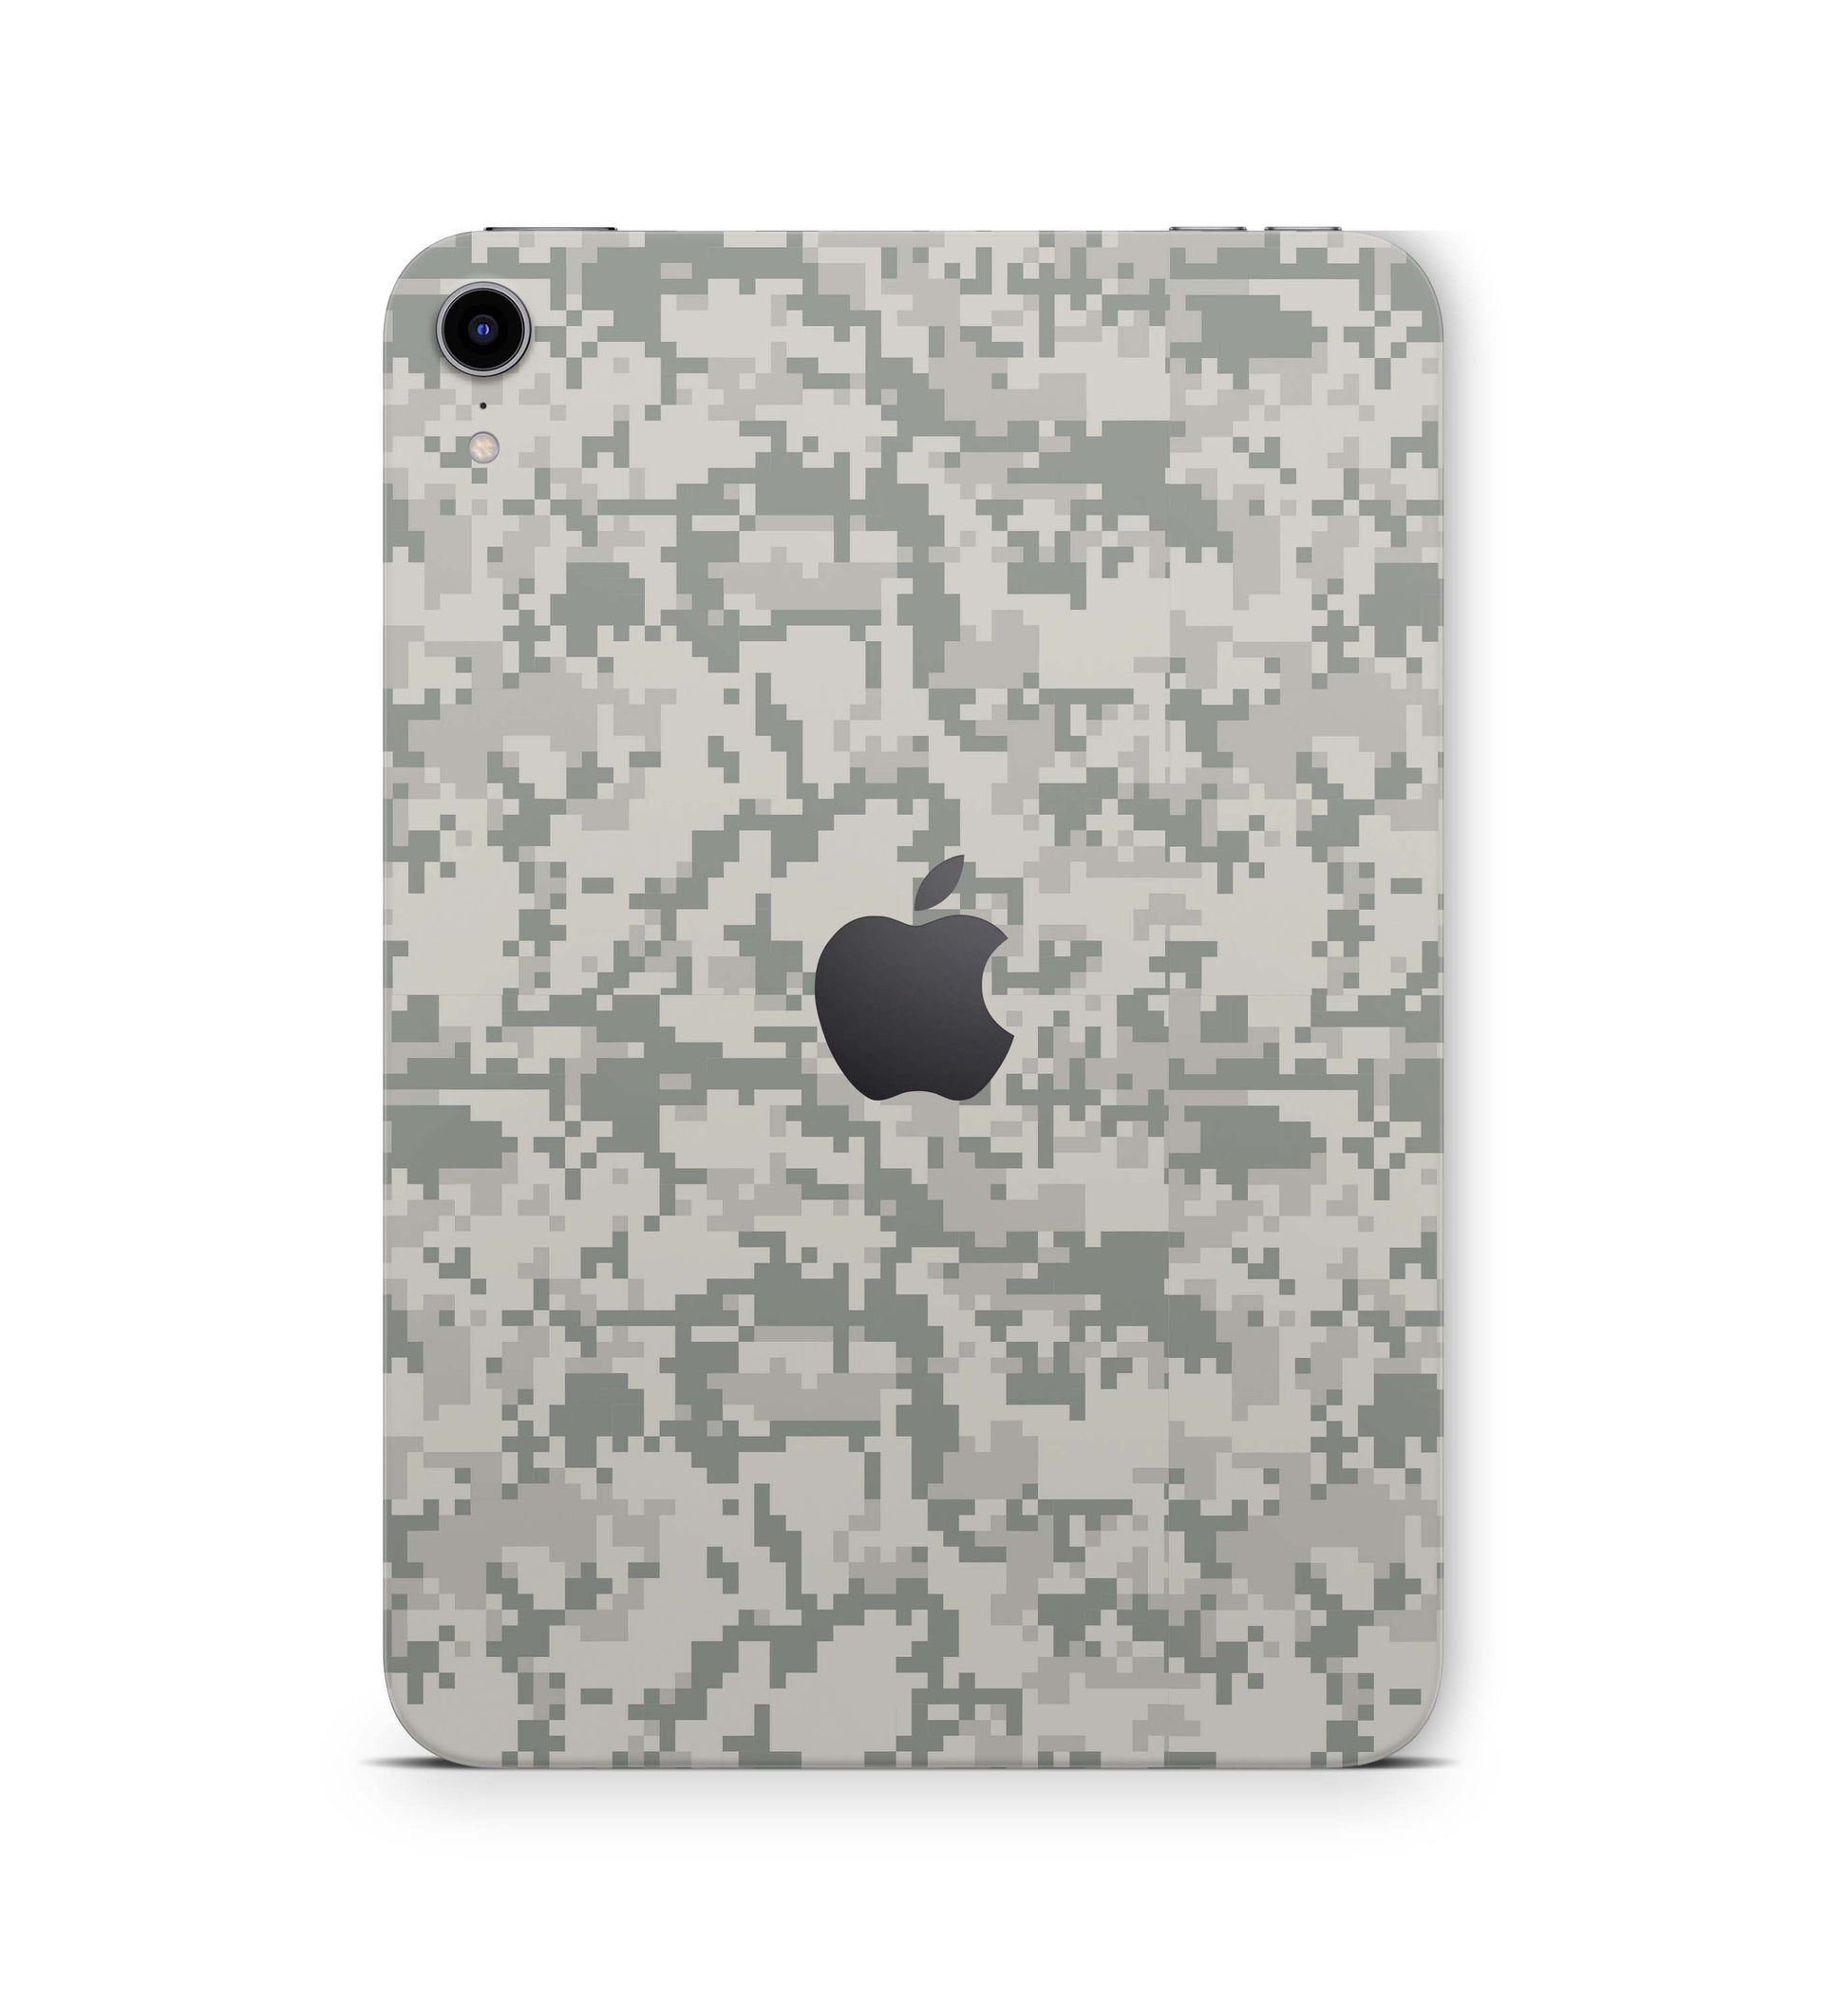 Apple iPad Skin Design Cover Folie Vinyl Skins & Wraps für alle iPad Modelle Aufkleber Skins4u Acu-Camo  